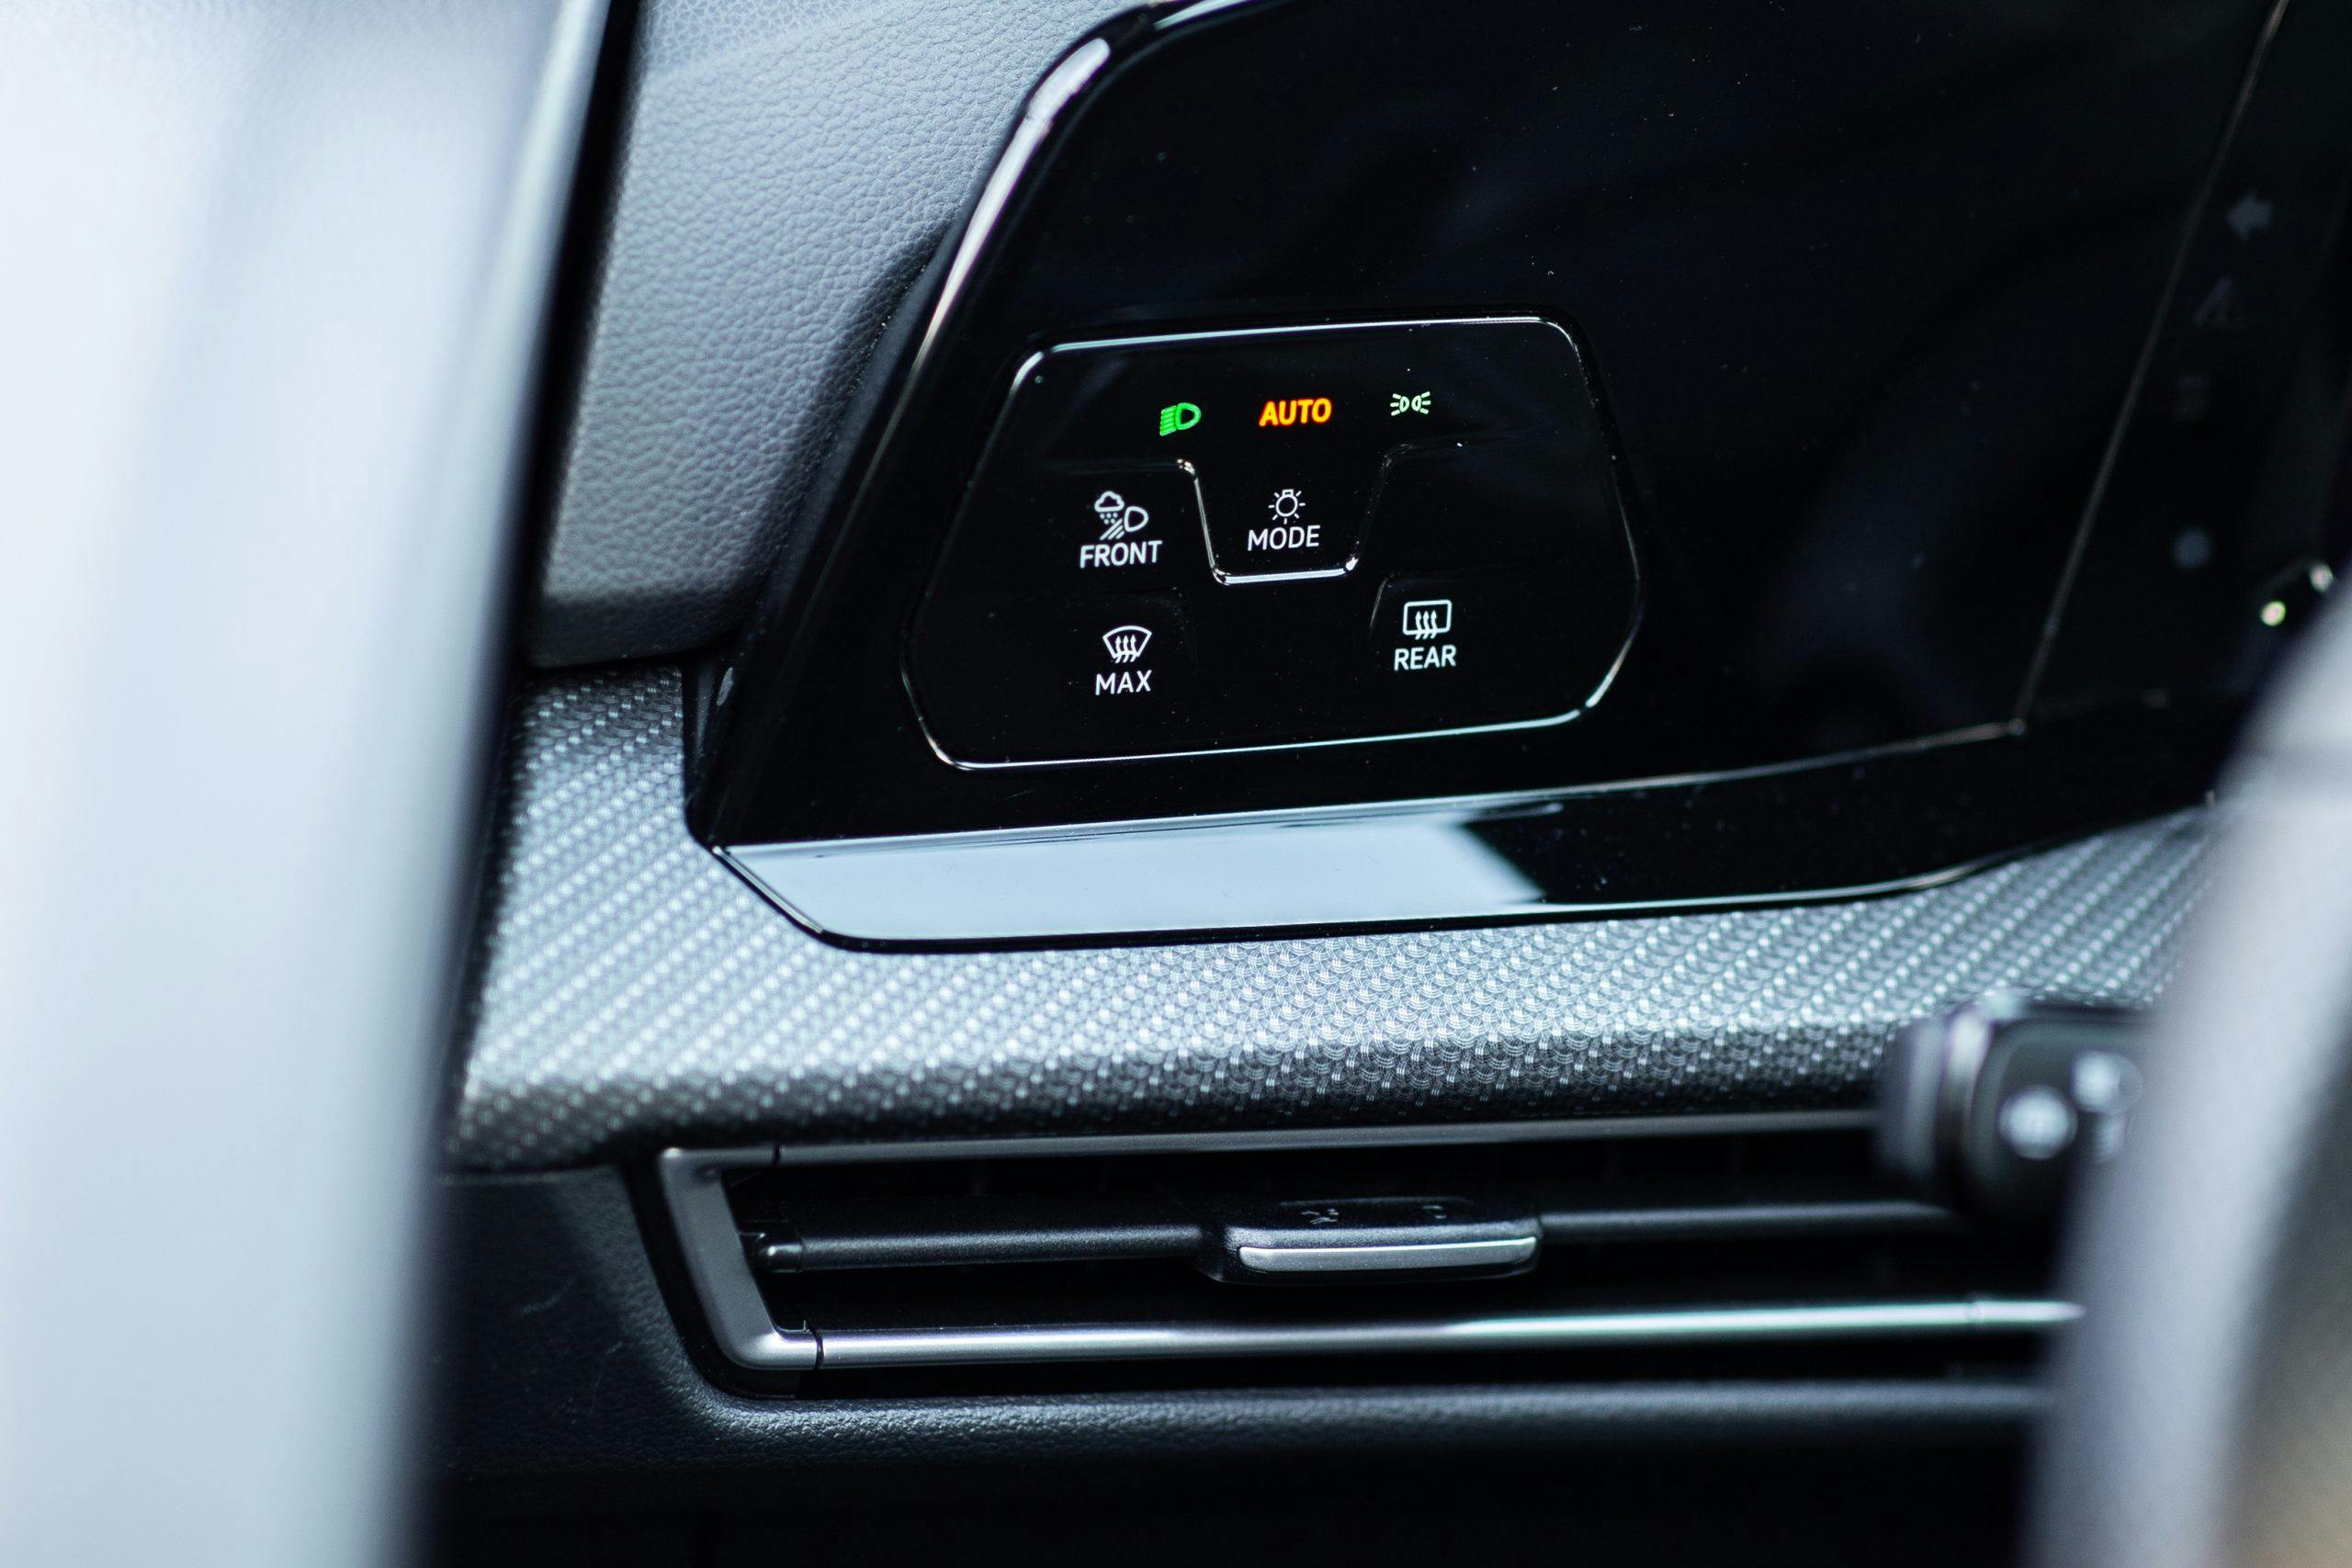 VW Golf R interior dash controls detail